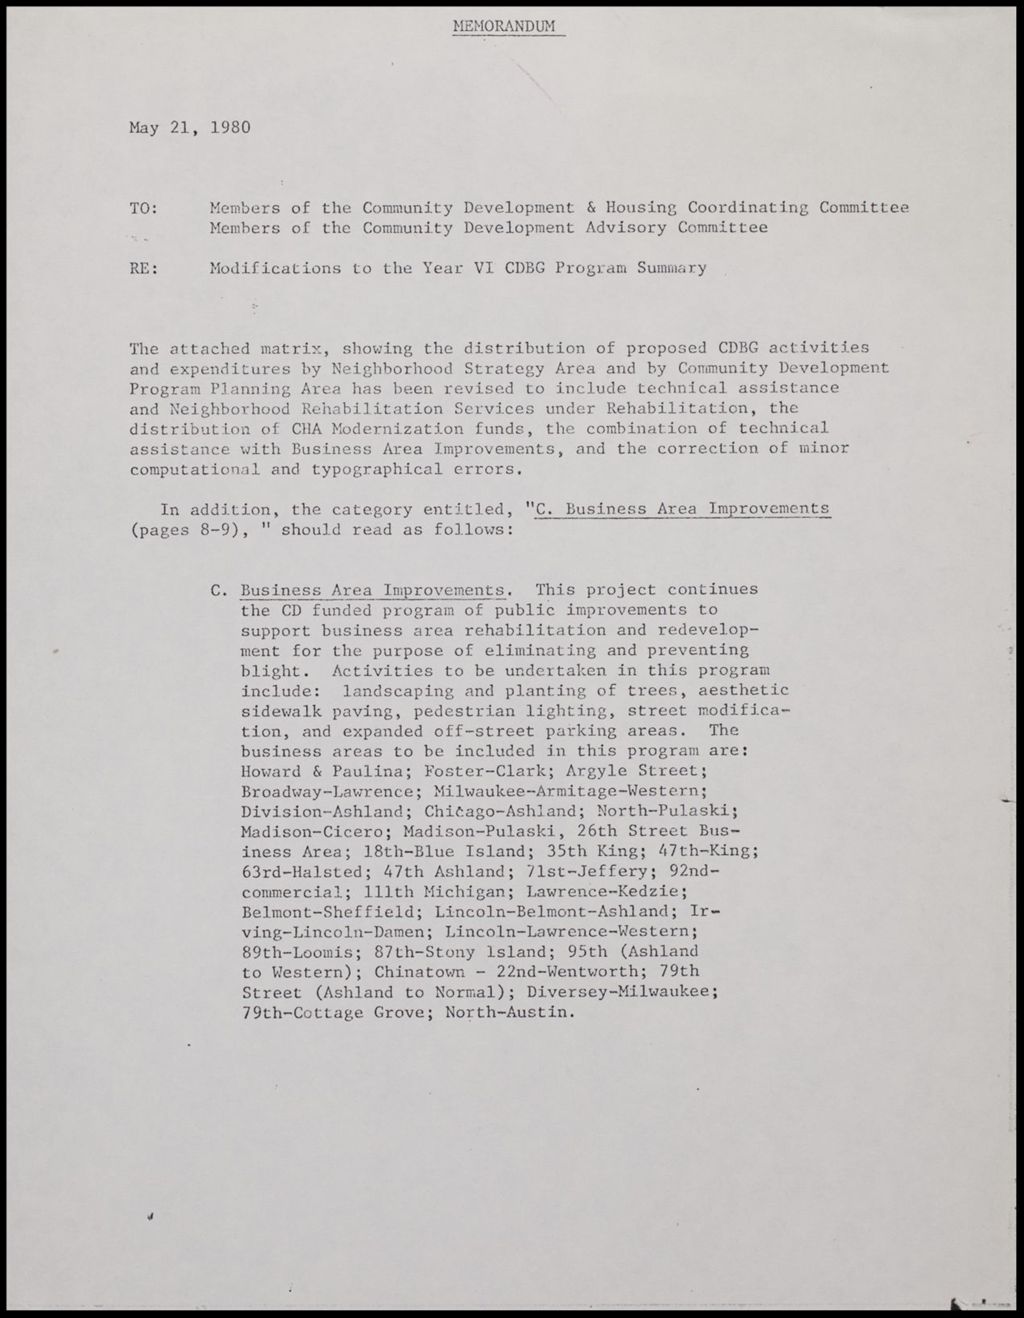 Miniature of Community Development Block Grant, 1980 (Folder II-1768)